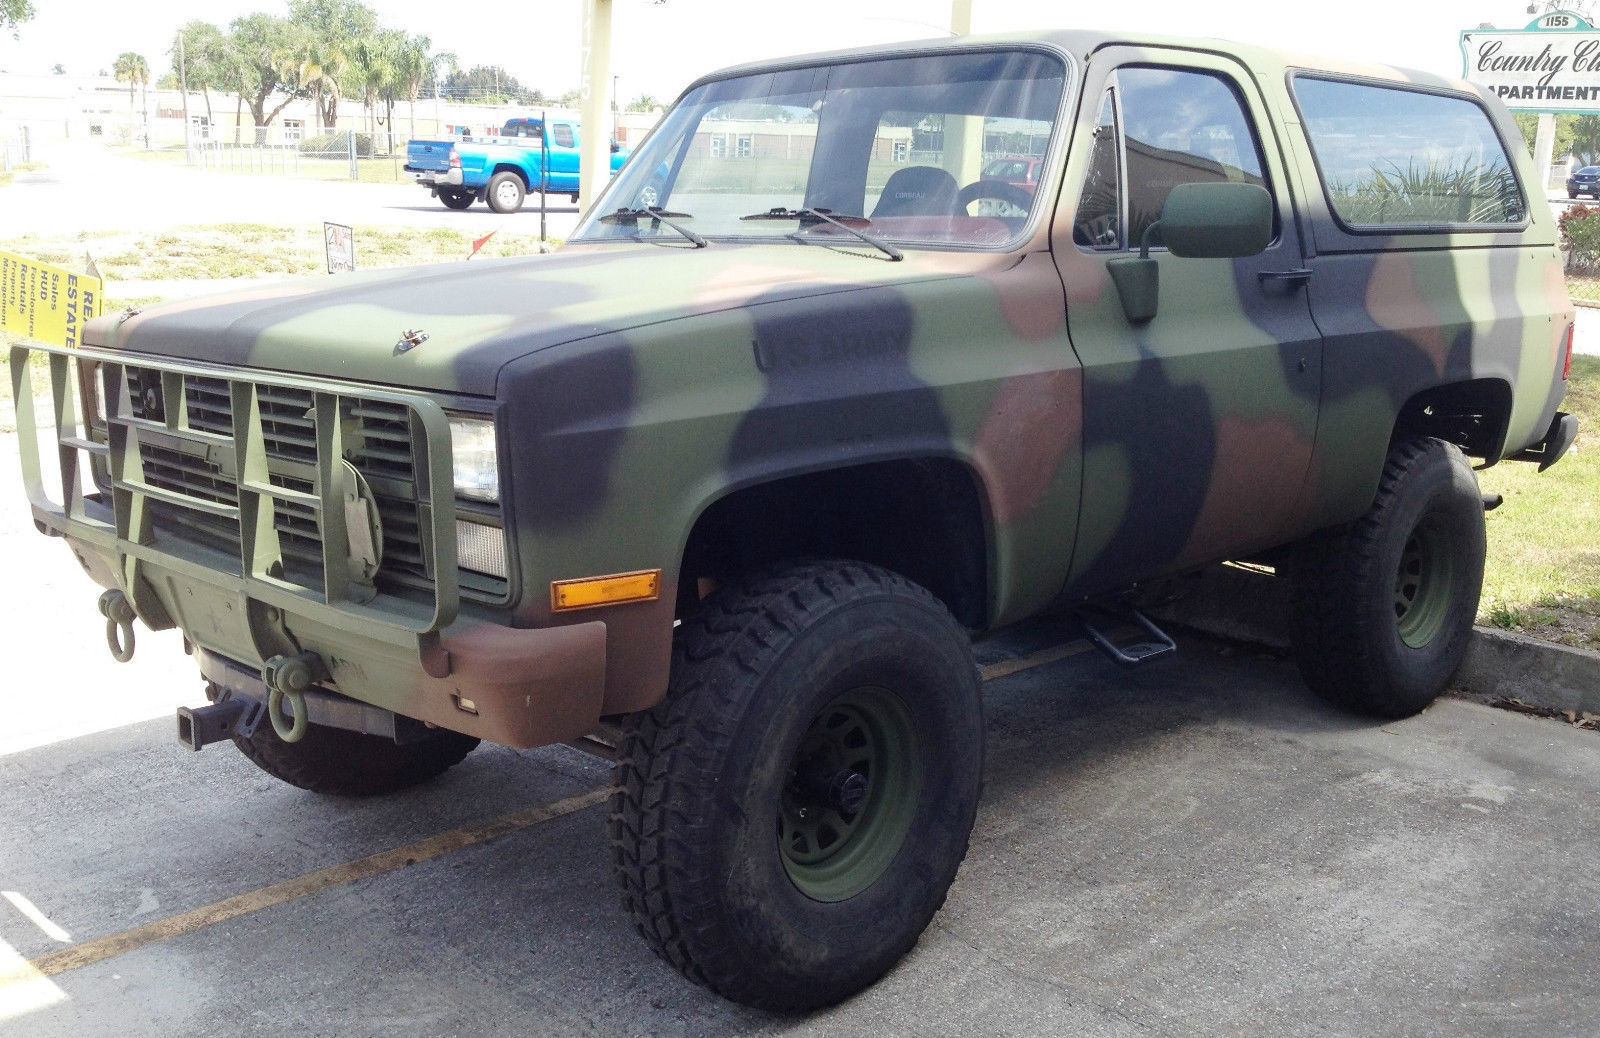 1984 Chevrolet Blazer for sale in Cocoa, Florida, United States.